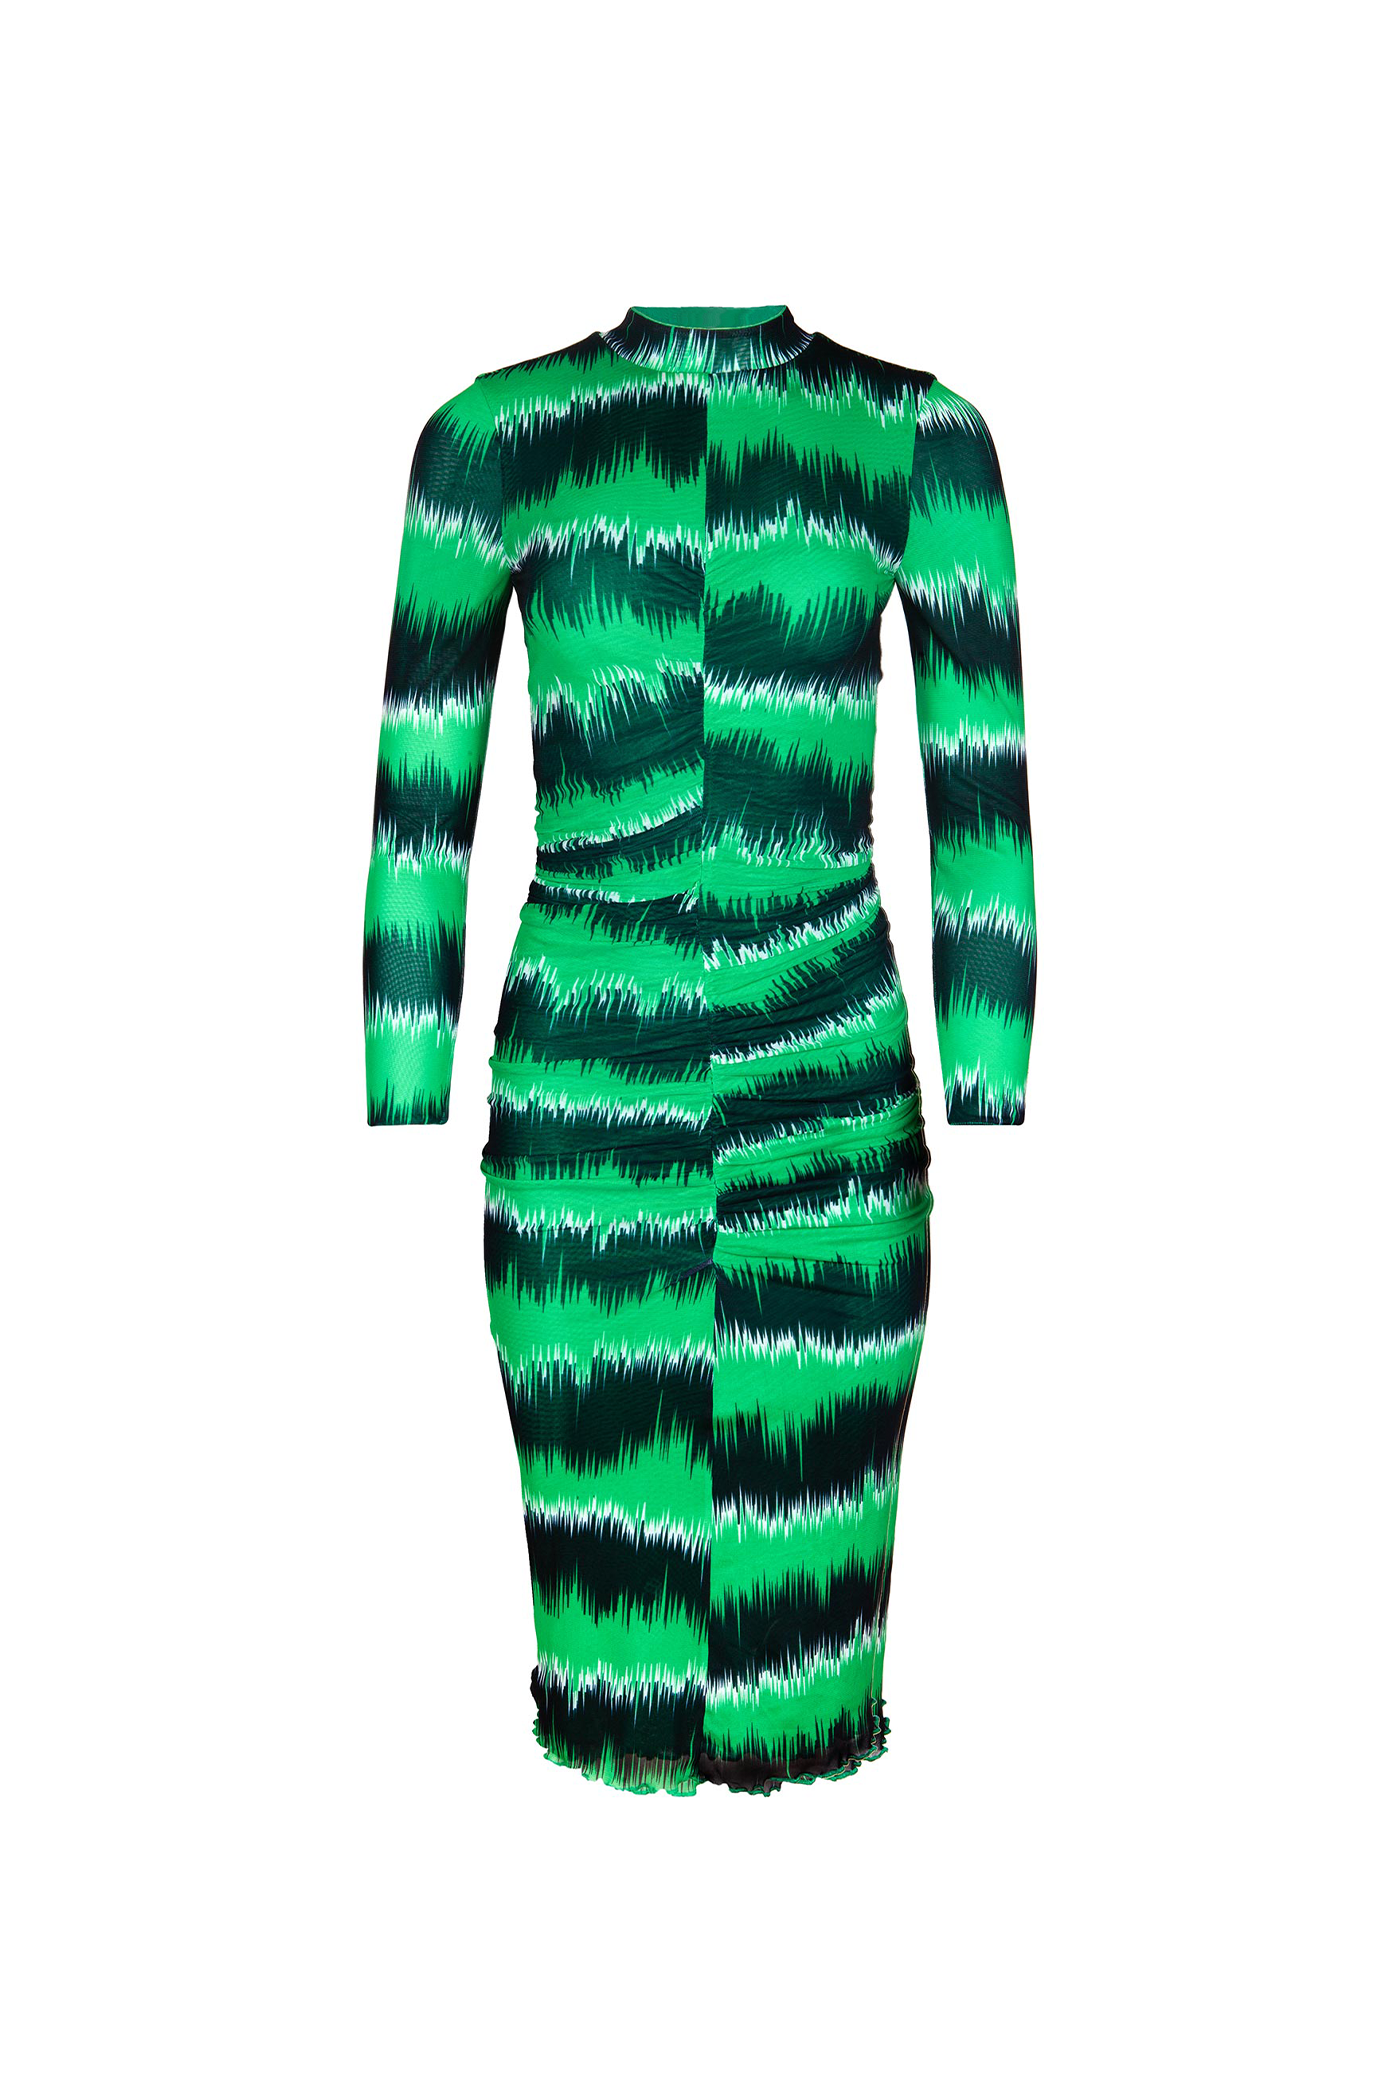 Image of Gemini Dress - Electric Static / Power Green